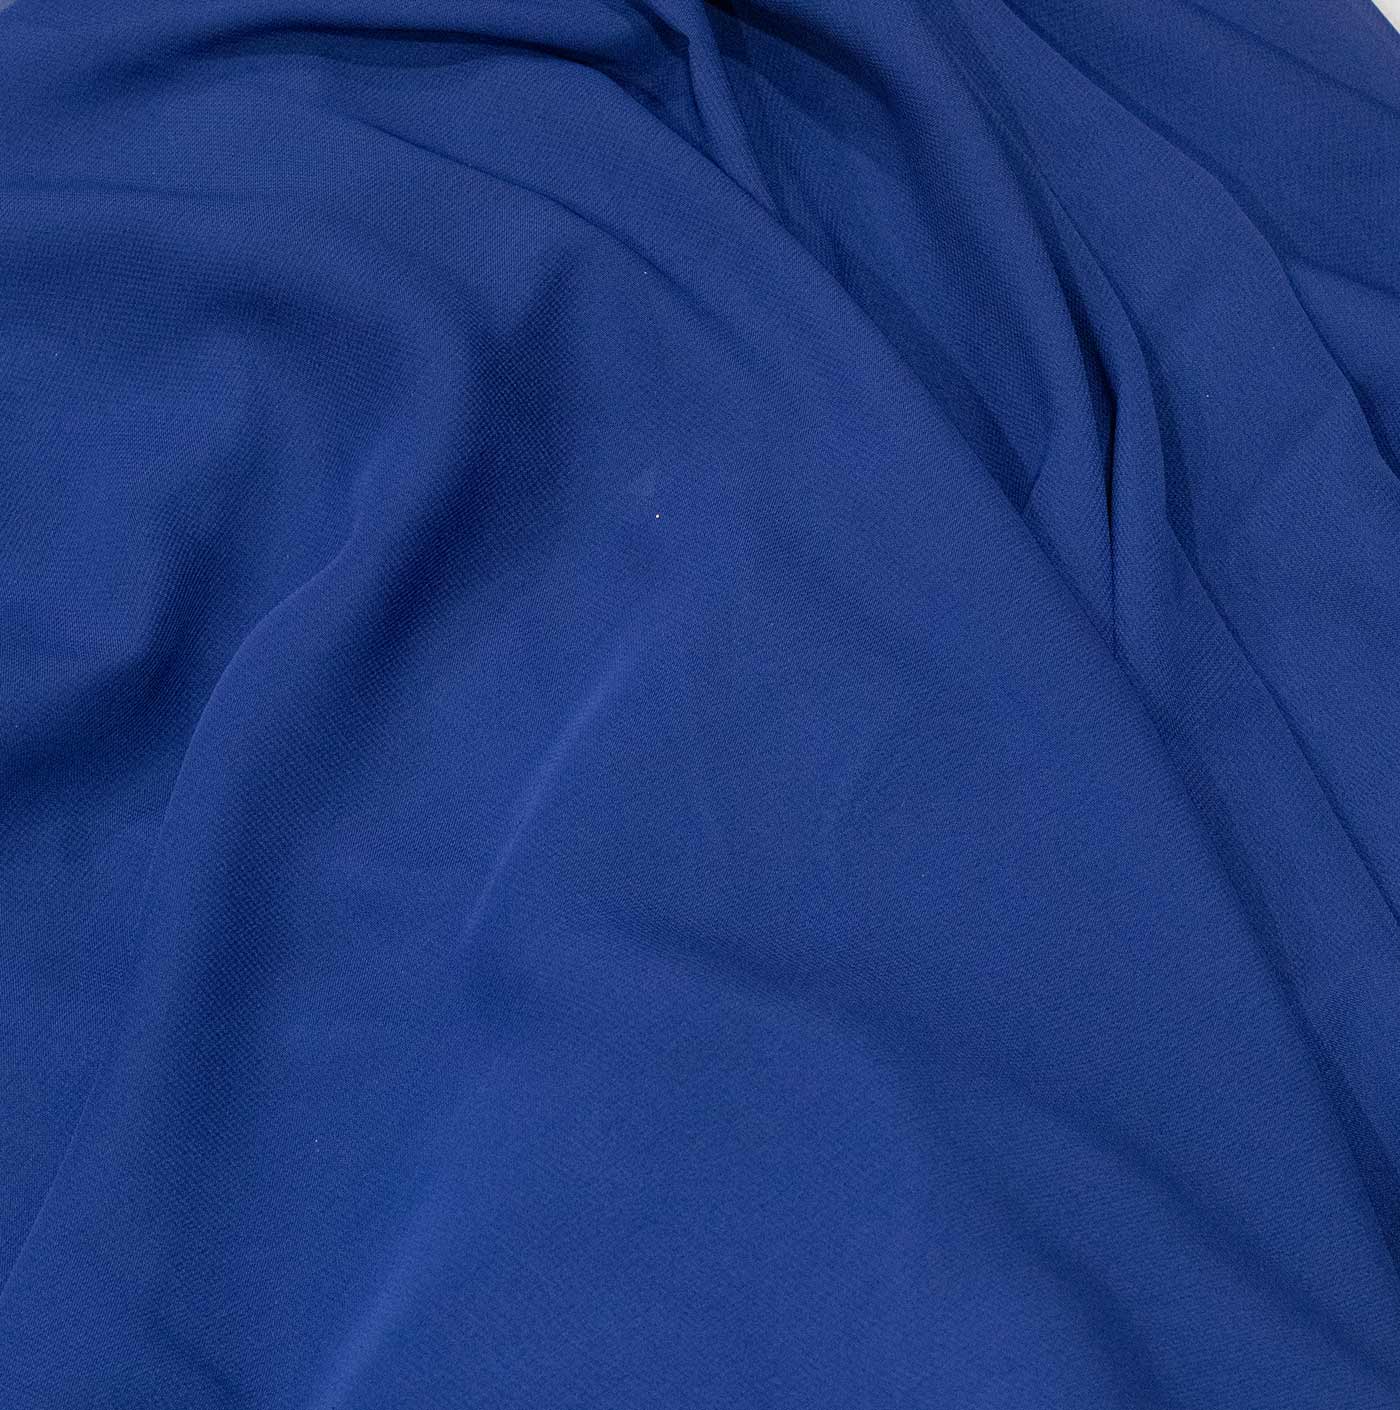 Navy Blue Silk Chiffon Fabric